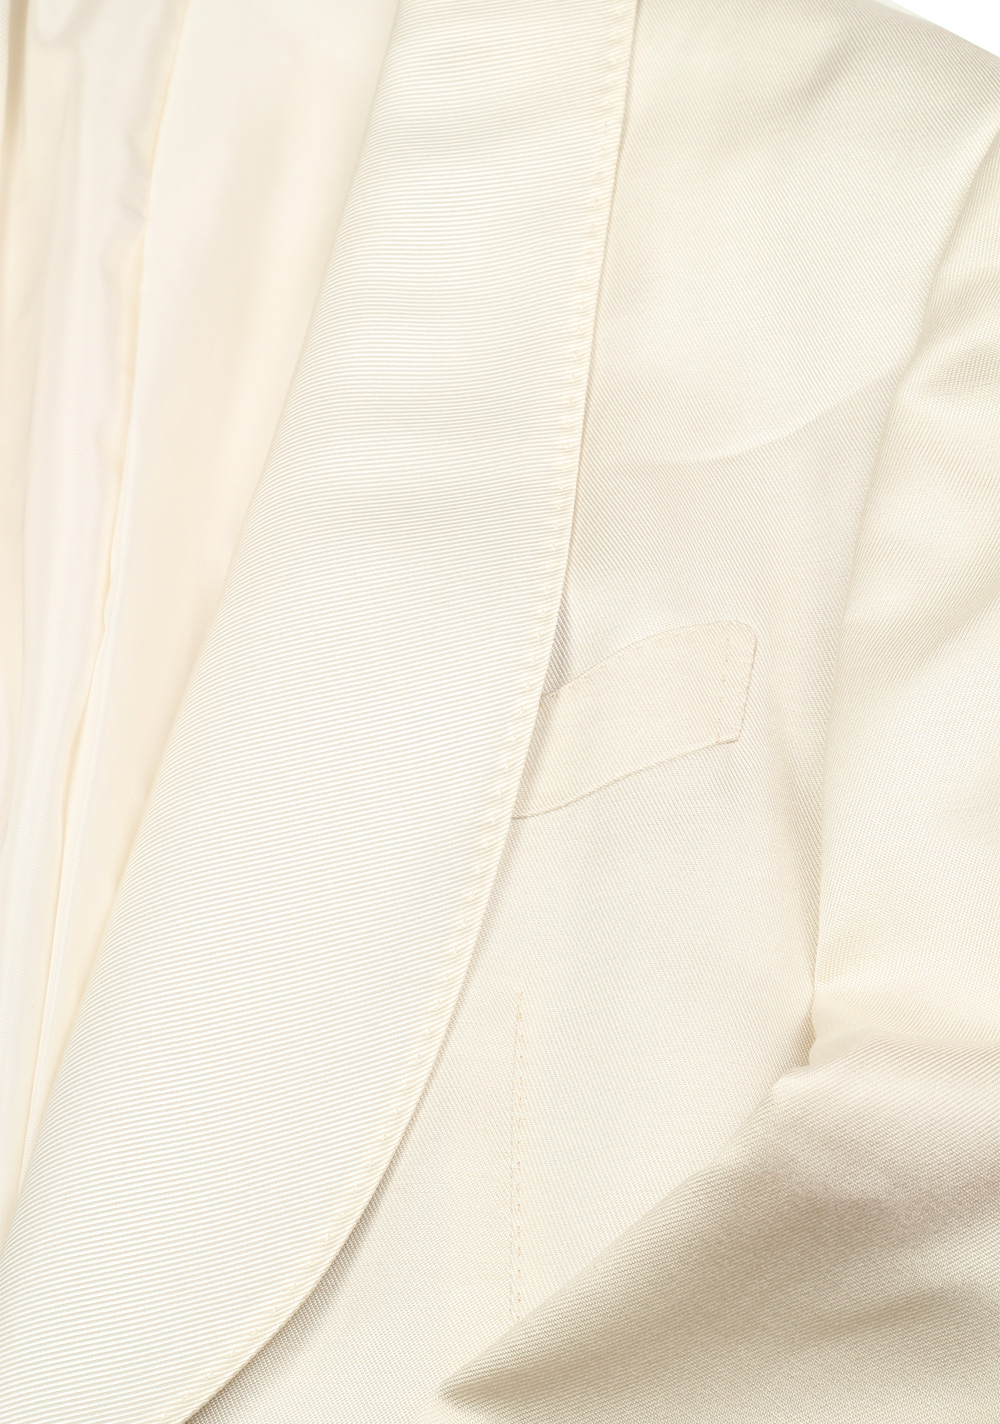 TOM FORD Shelton Ivory Sport Coat Tuxedo Dinner Jacket Size 46 / 36R U.S. | Costume Limité